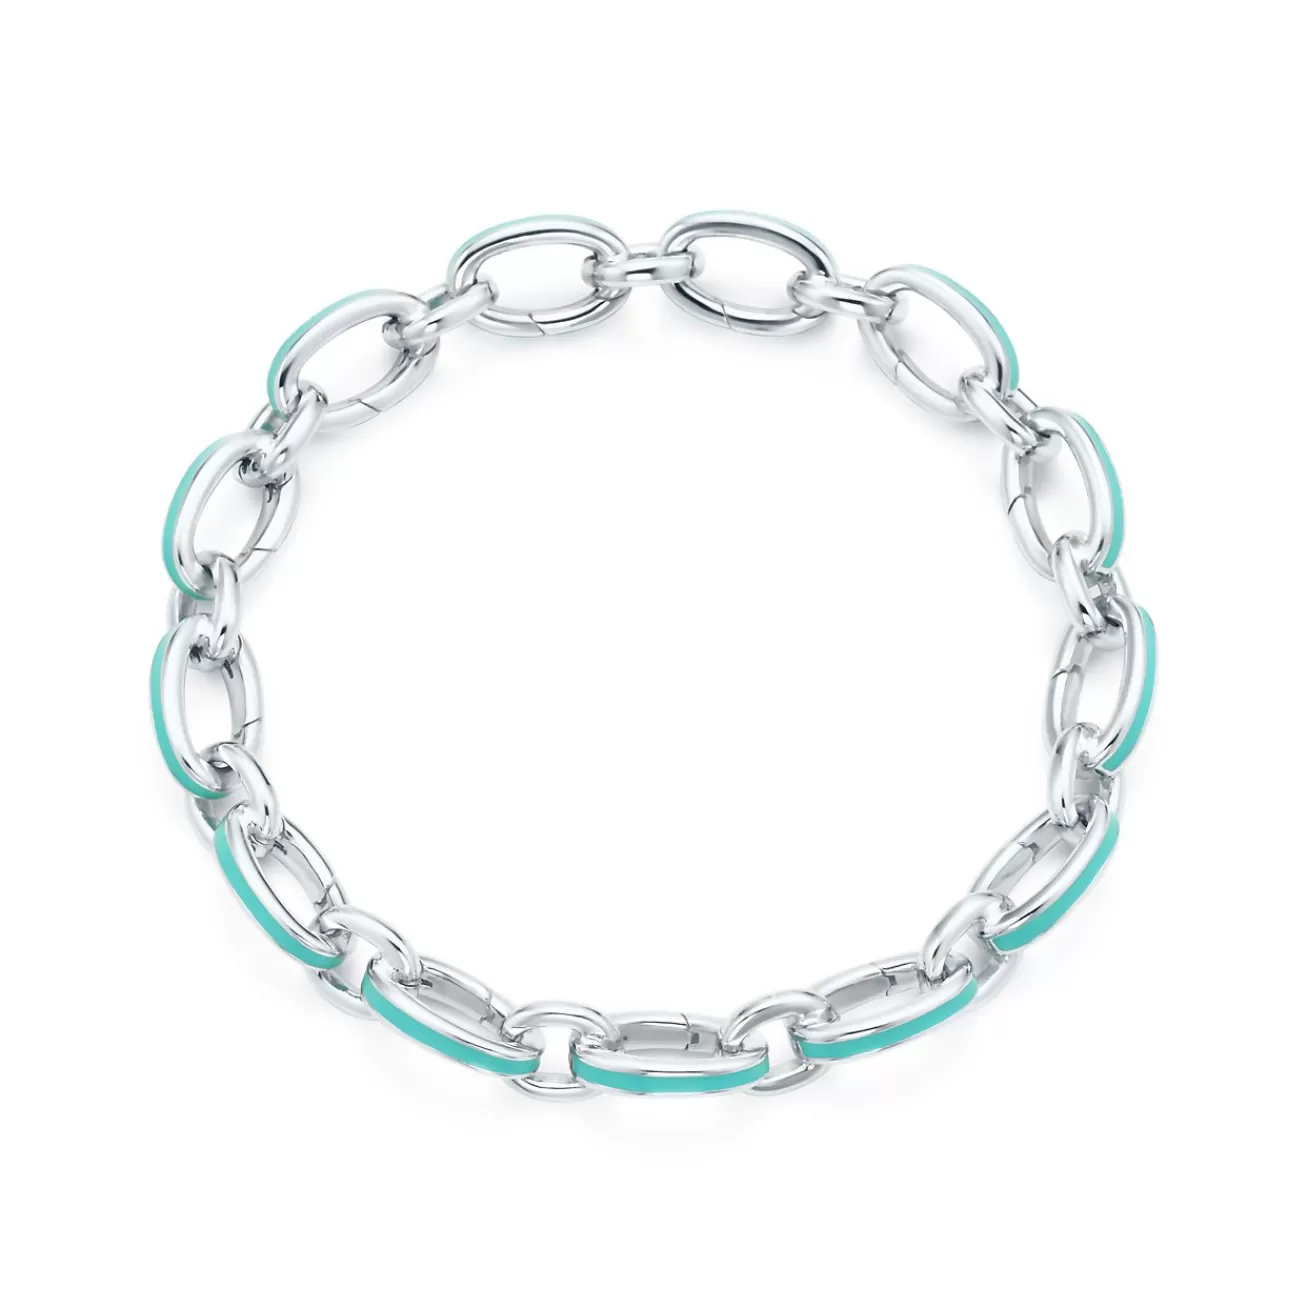 Tiffany & Co. Tiffany Blue® clasping link bracelet in silver with enamel finish, 7.5" long. | ^ Bracelets | Sterling Silver Jewelry